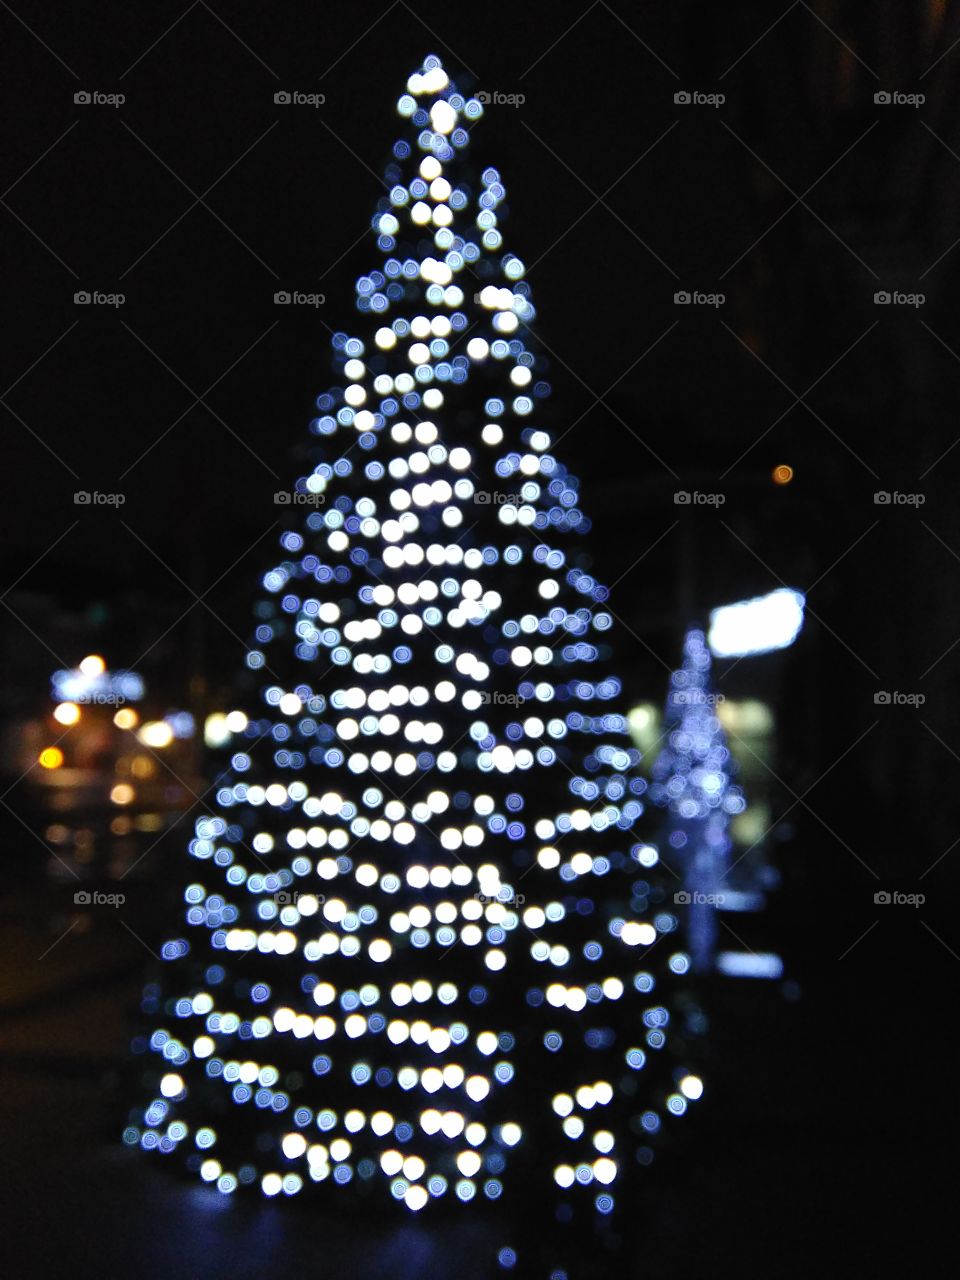 Christmas tree lighting